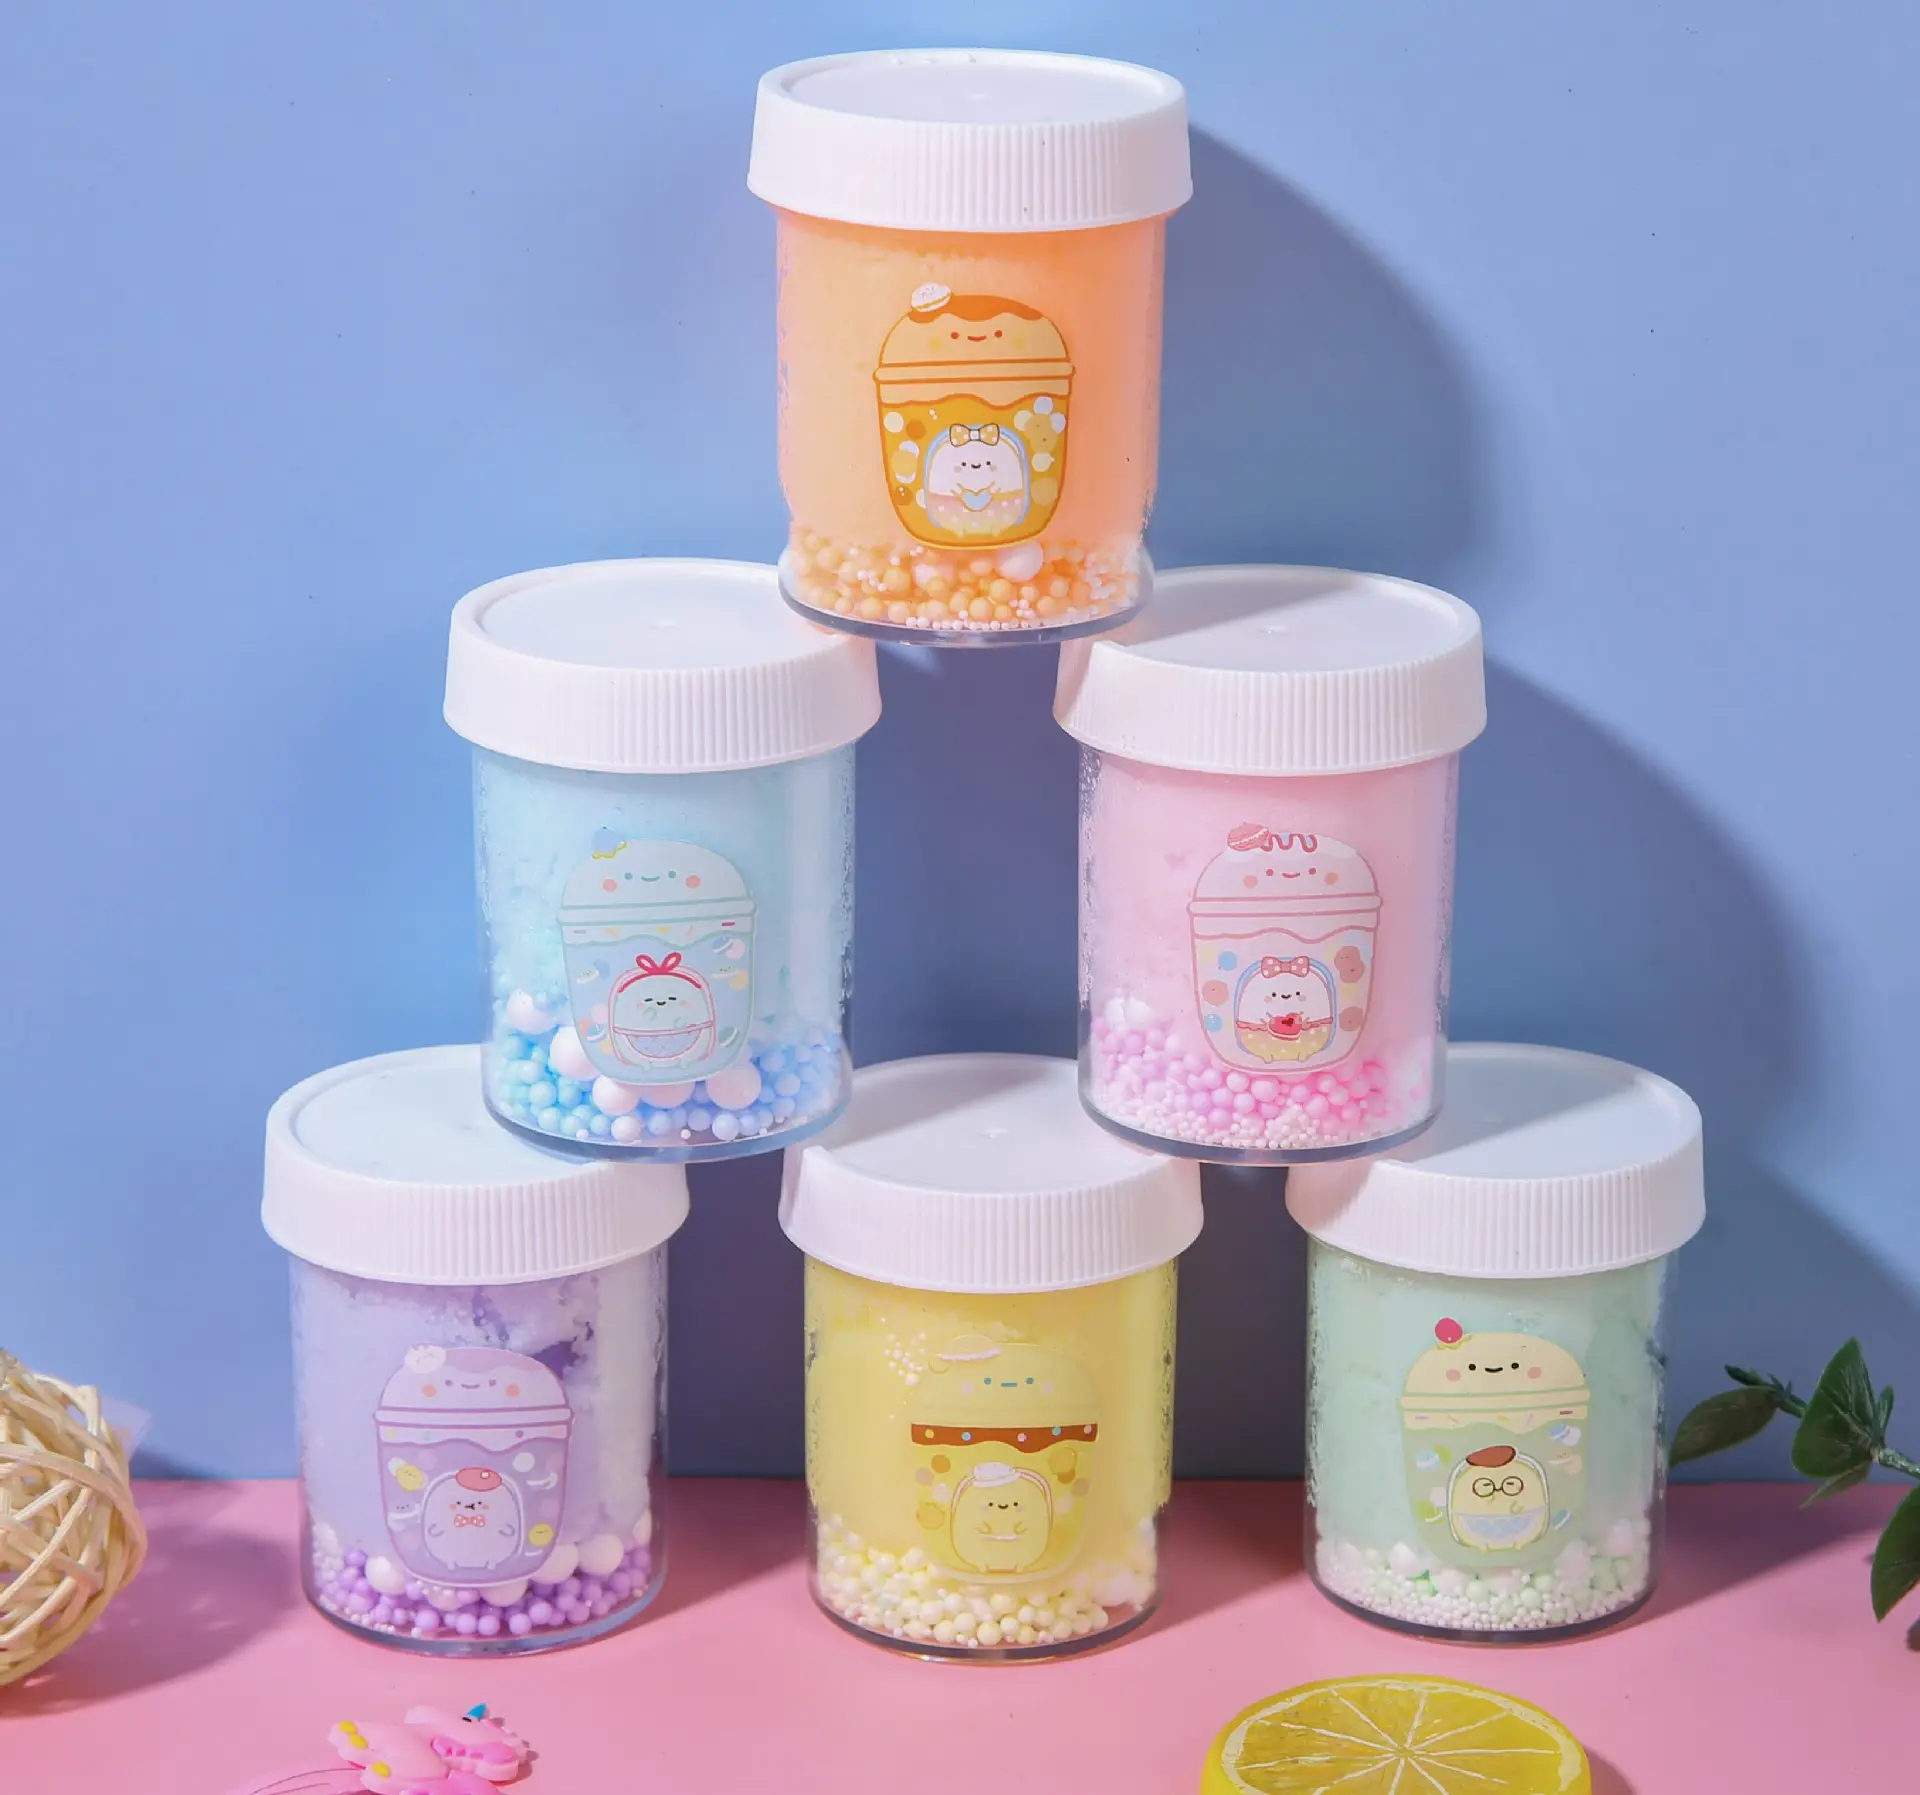 Hot Selling Slime Suppliers Macaron Ice Slime Silk Mud Crystal Slime Making Kit For Kids Children